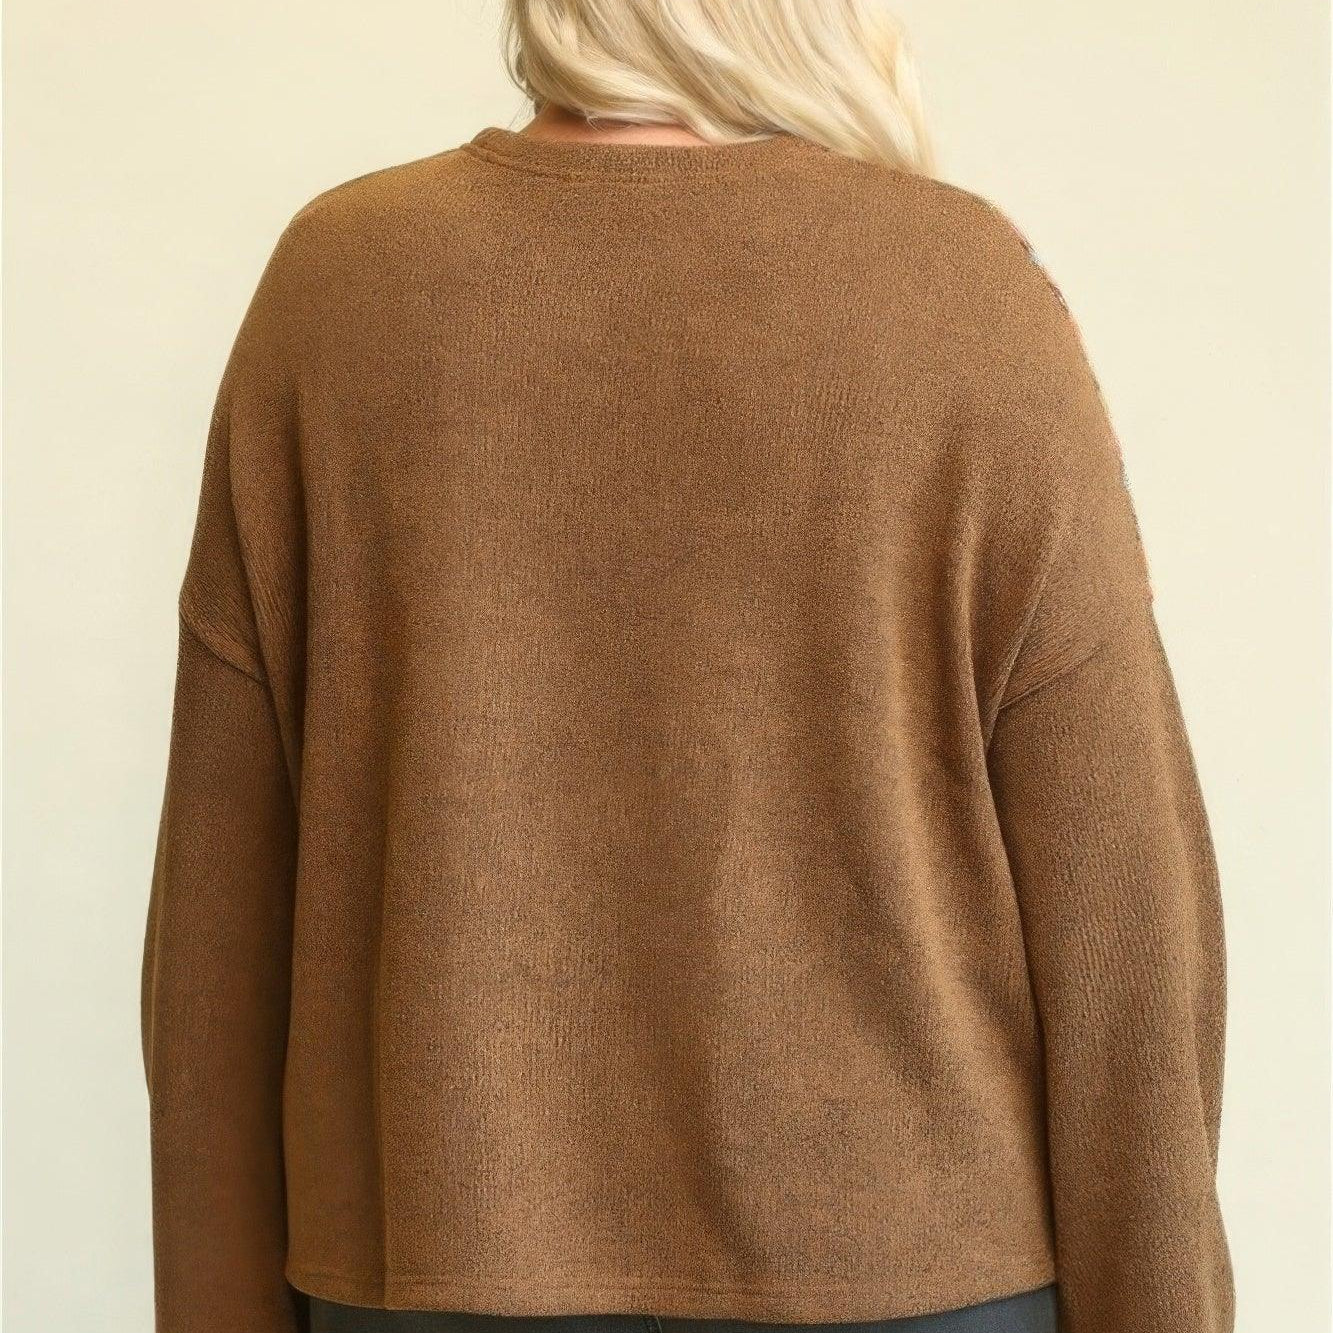 Women's Shirts Brown Knit Mixed Loose Top